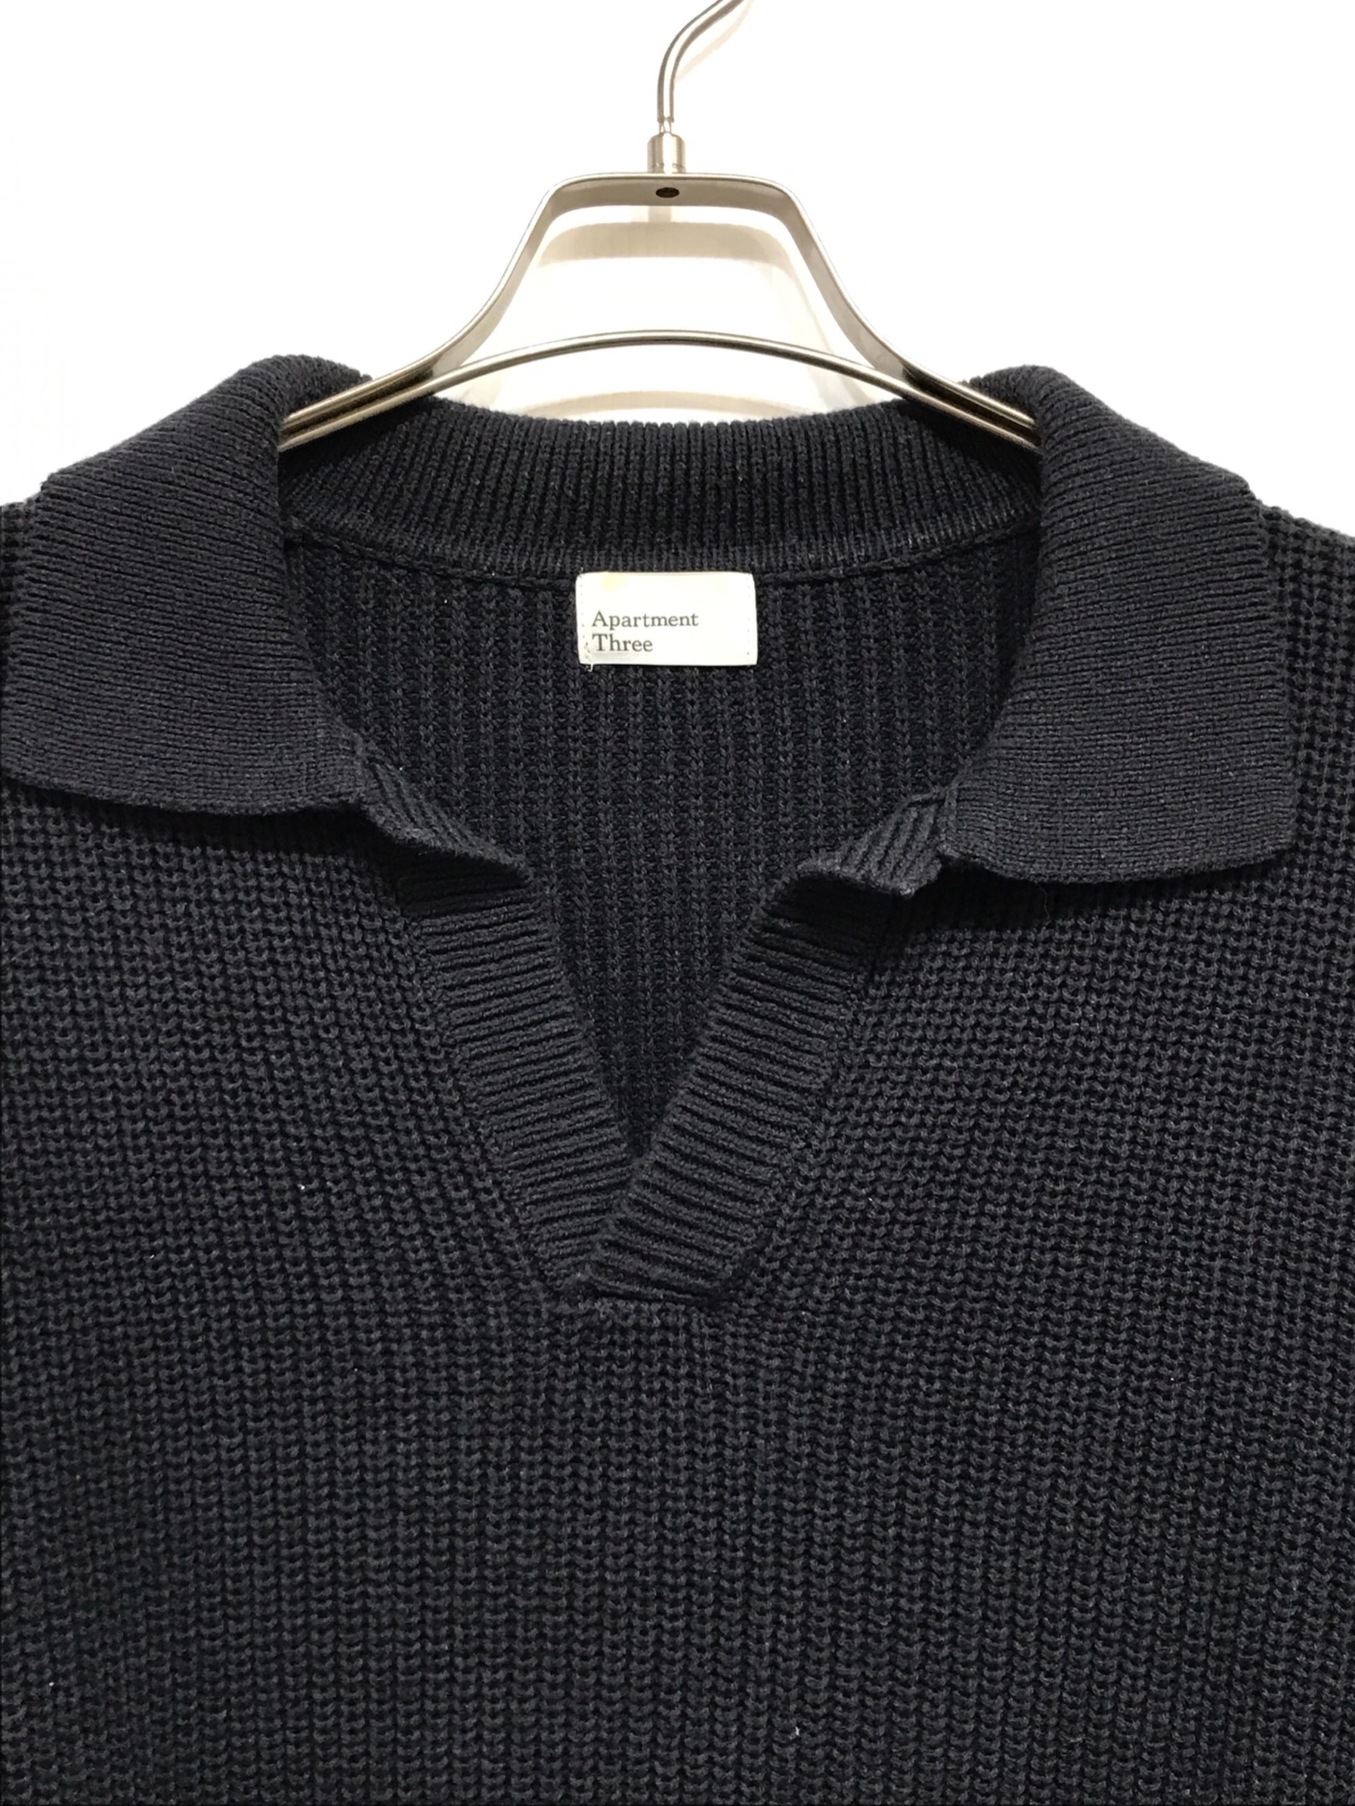 apartment Three (アパートメントスリー) Cotton-Blend Knitted Polo Shirt ブラック サイズ:1